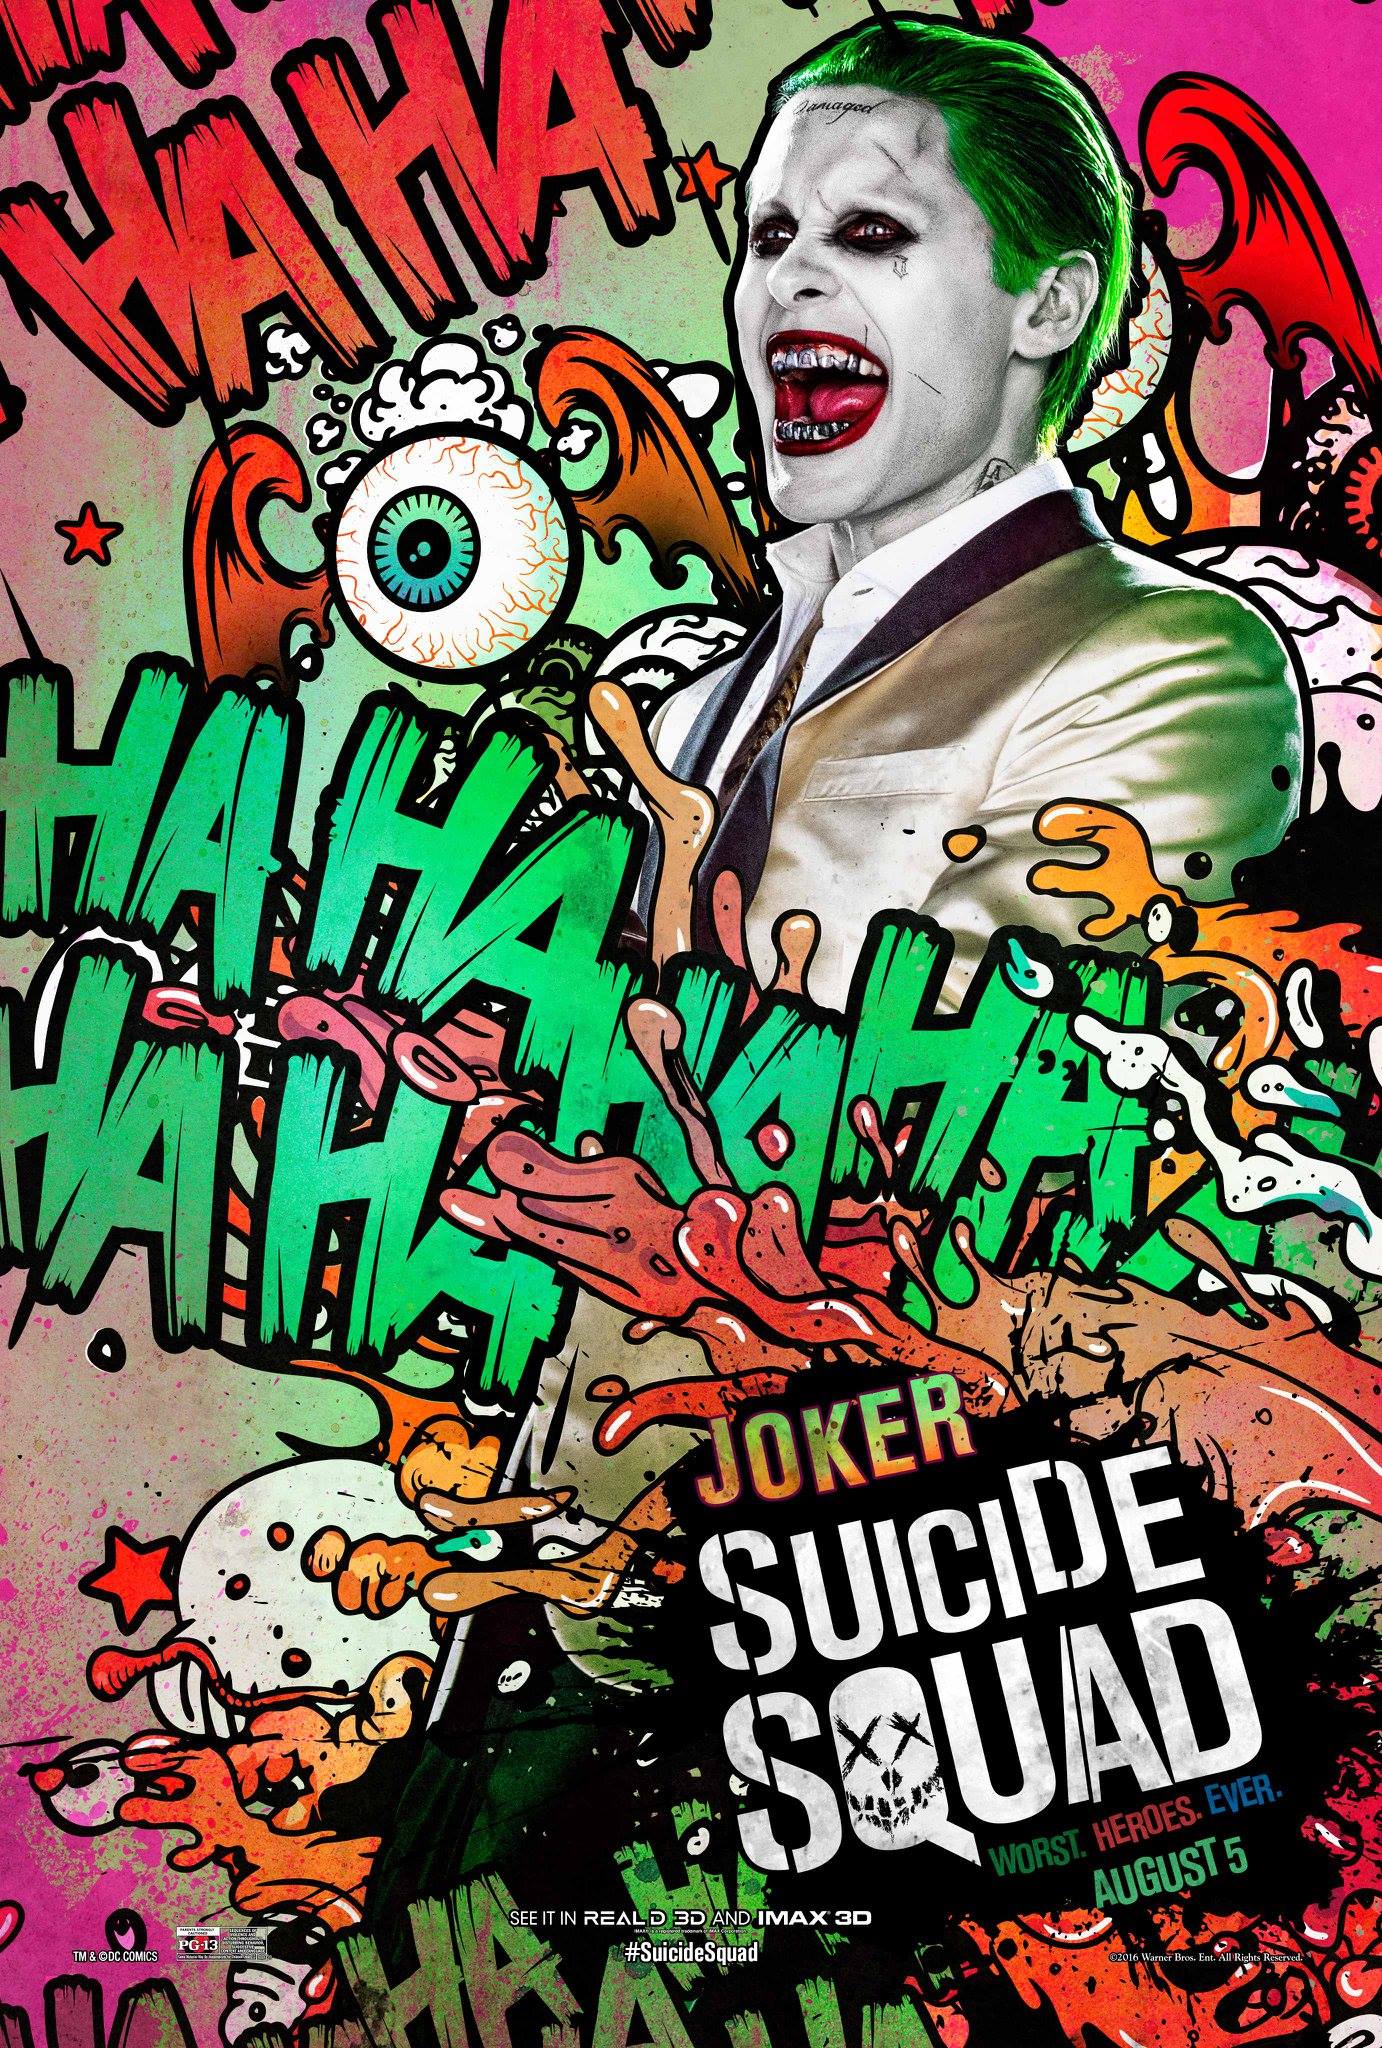 Joker Photo from Warner Bros.&; Suicide Squad